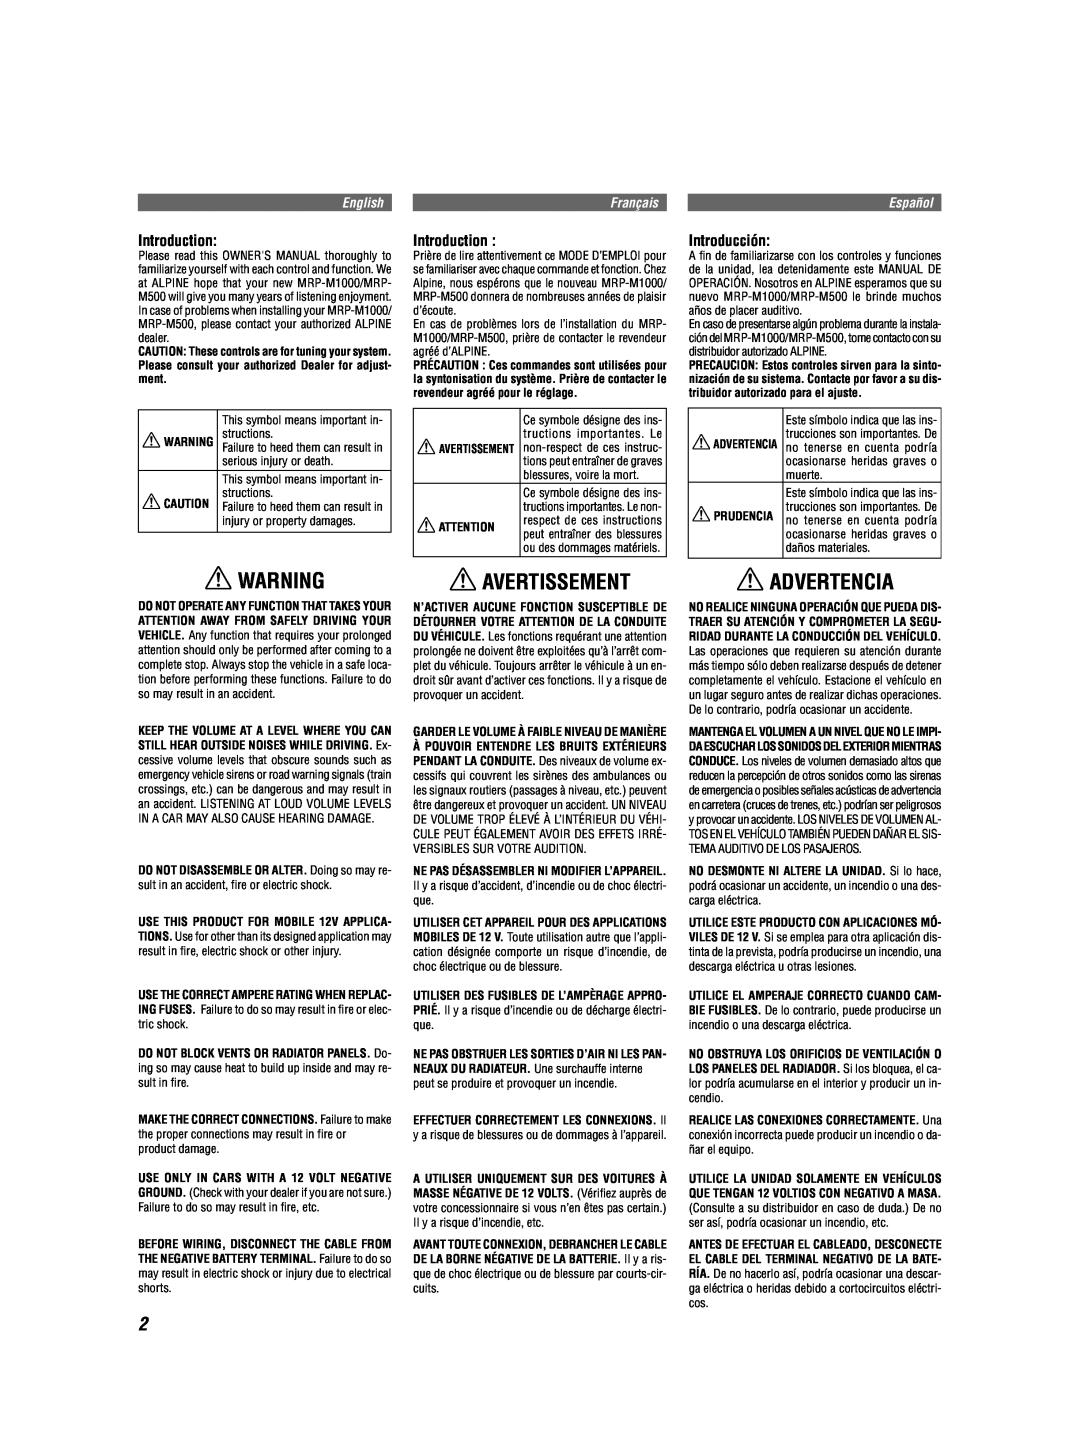 Alpine MRD-M500 owner manual Avertissement, Advertencia, Introduction, Introducción, English, Français, Español 